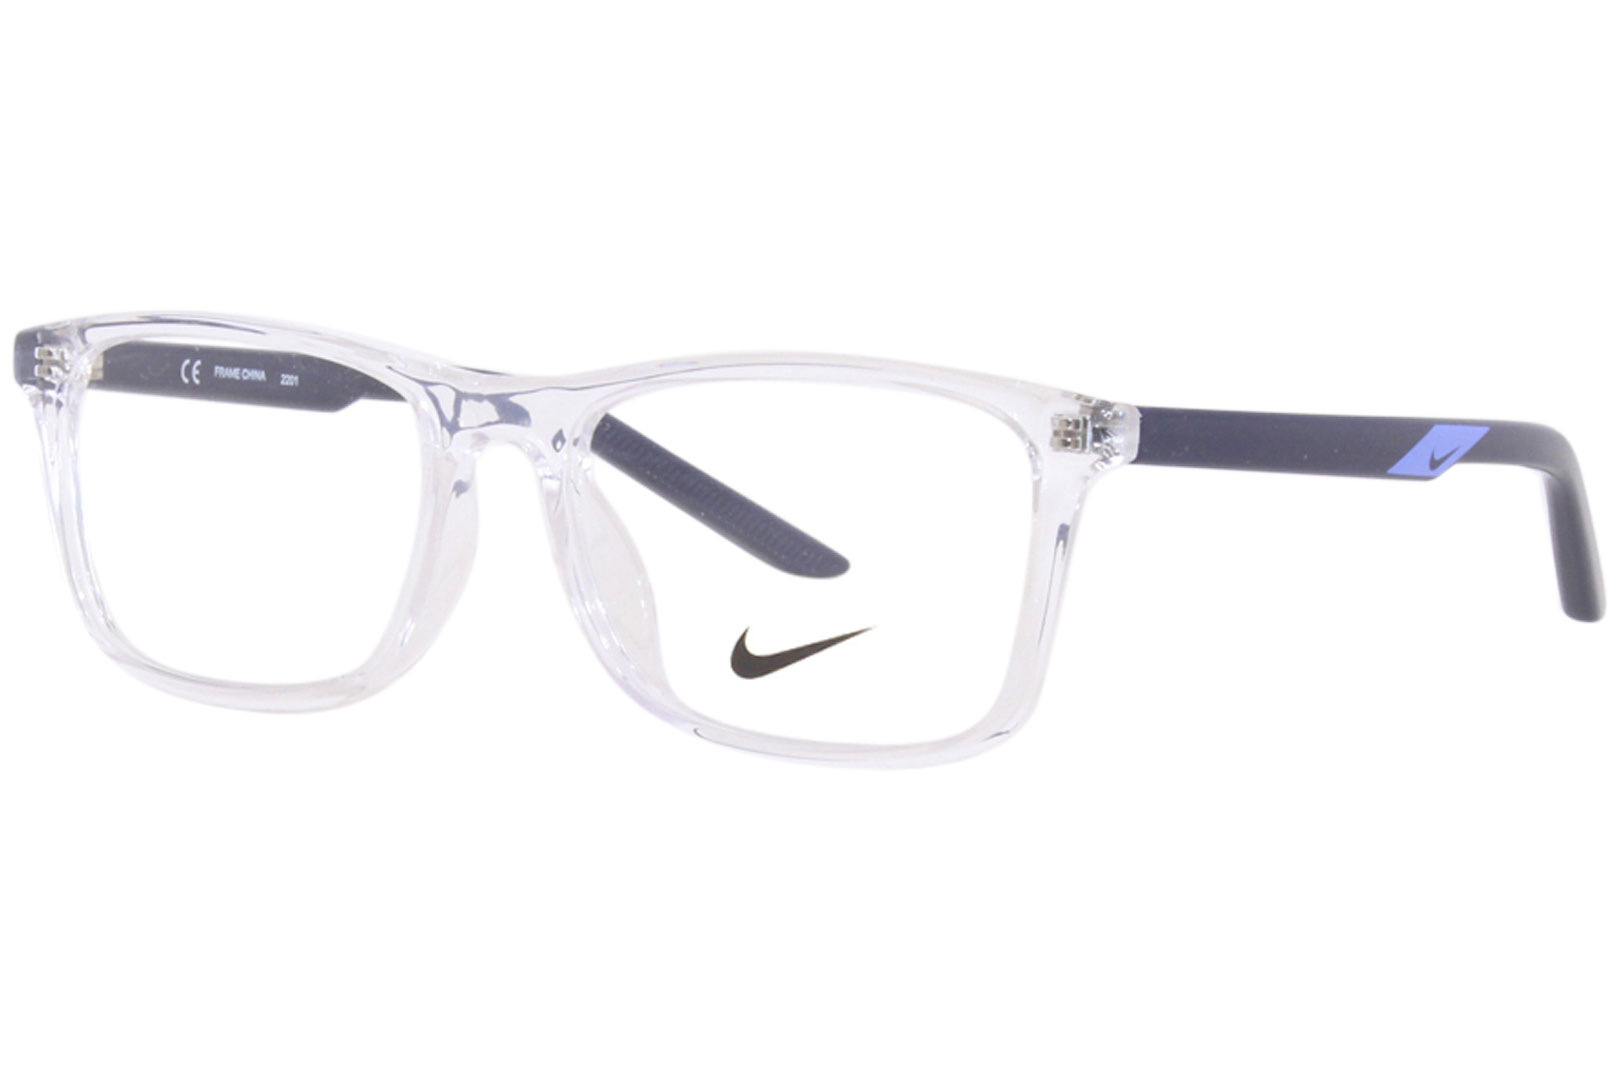 5544 Eyeglasses Frames by Nike